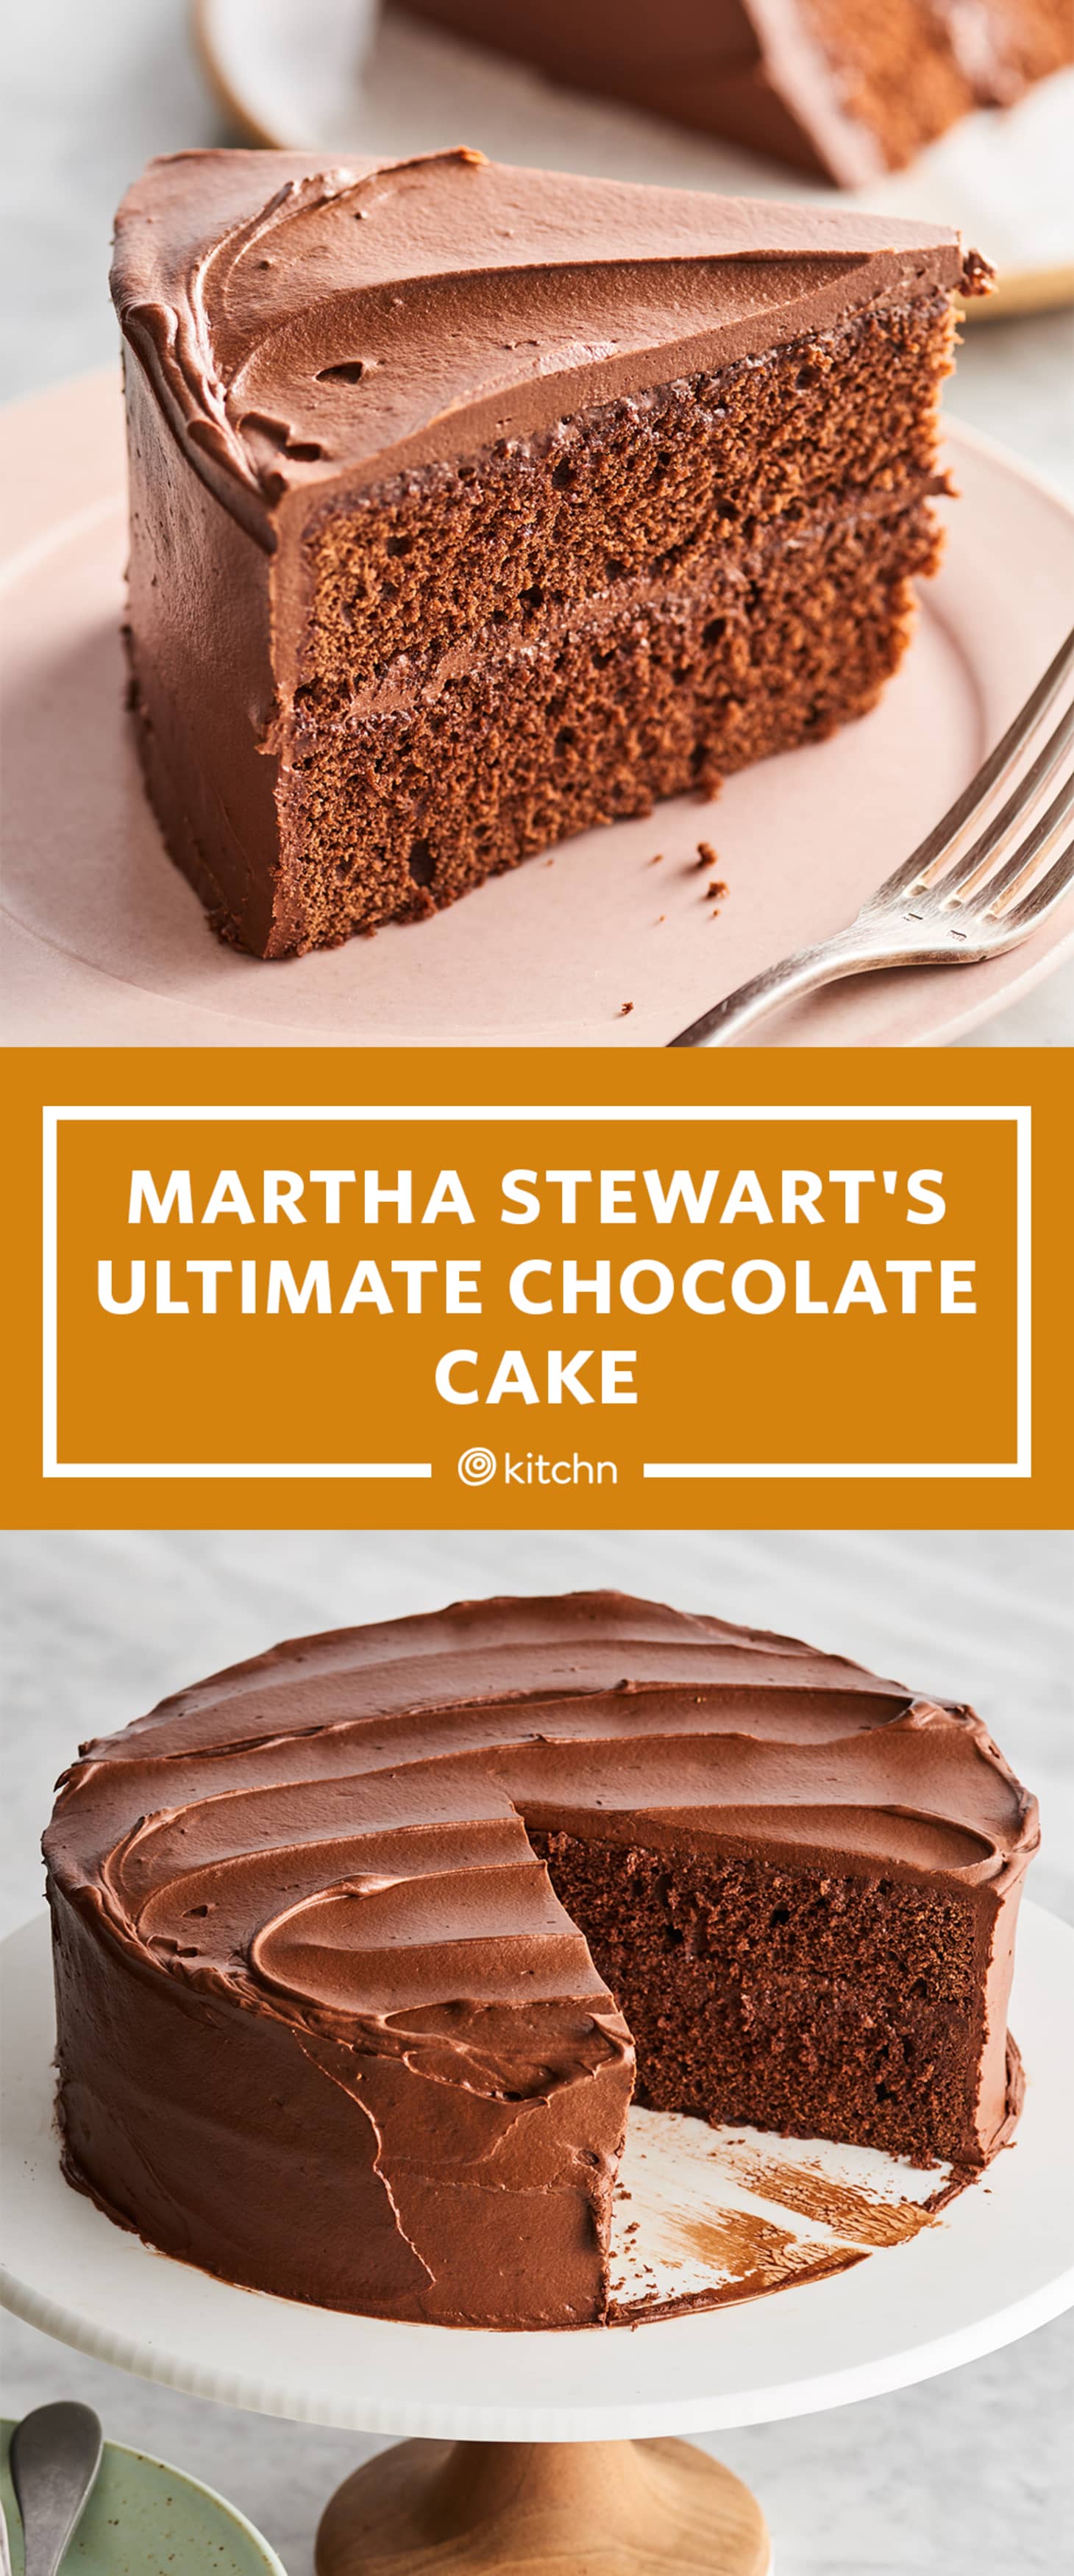 I Tried Martha Stewart's "Ultimate Chocolate Cake" Recipe | Kitchn